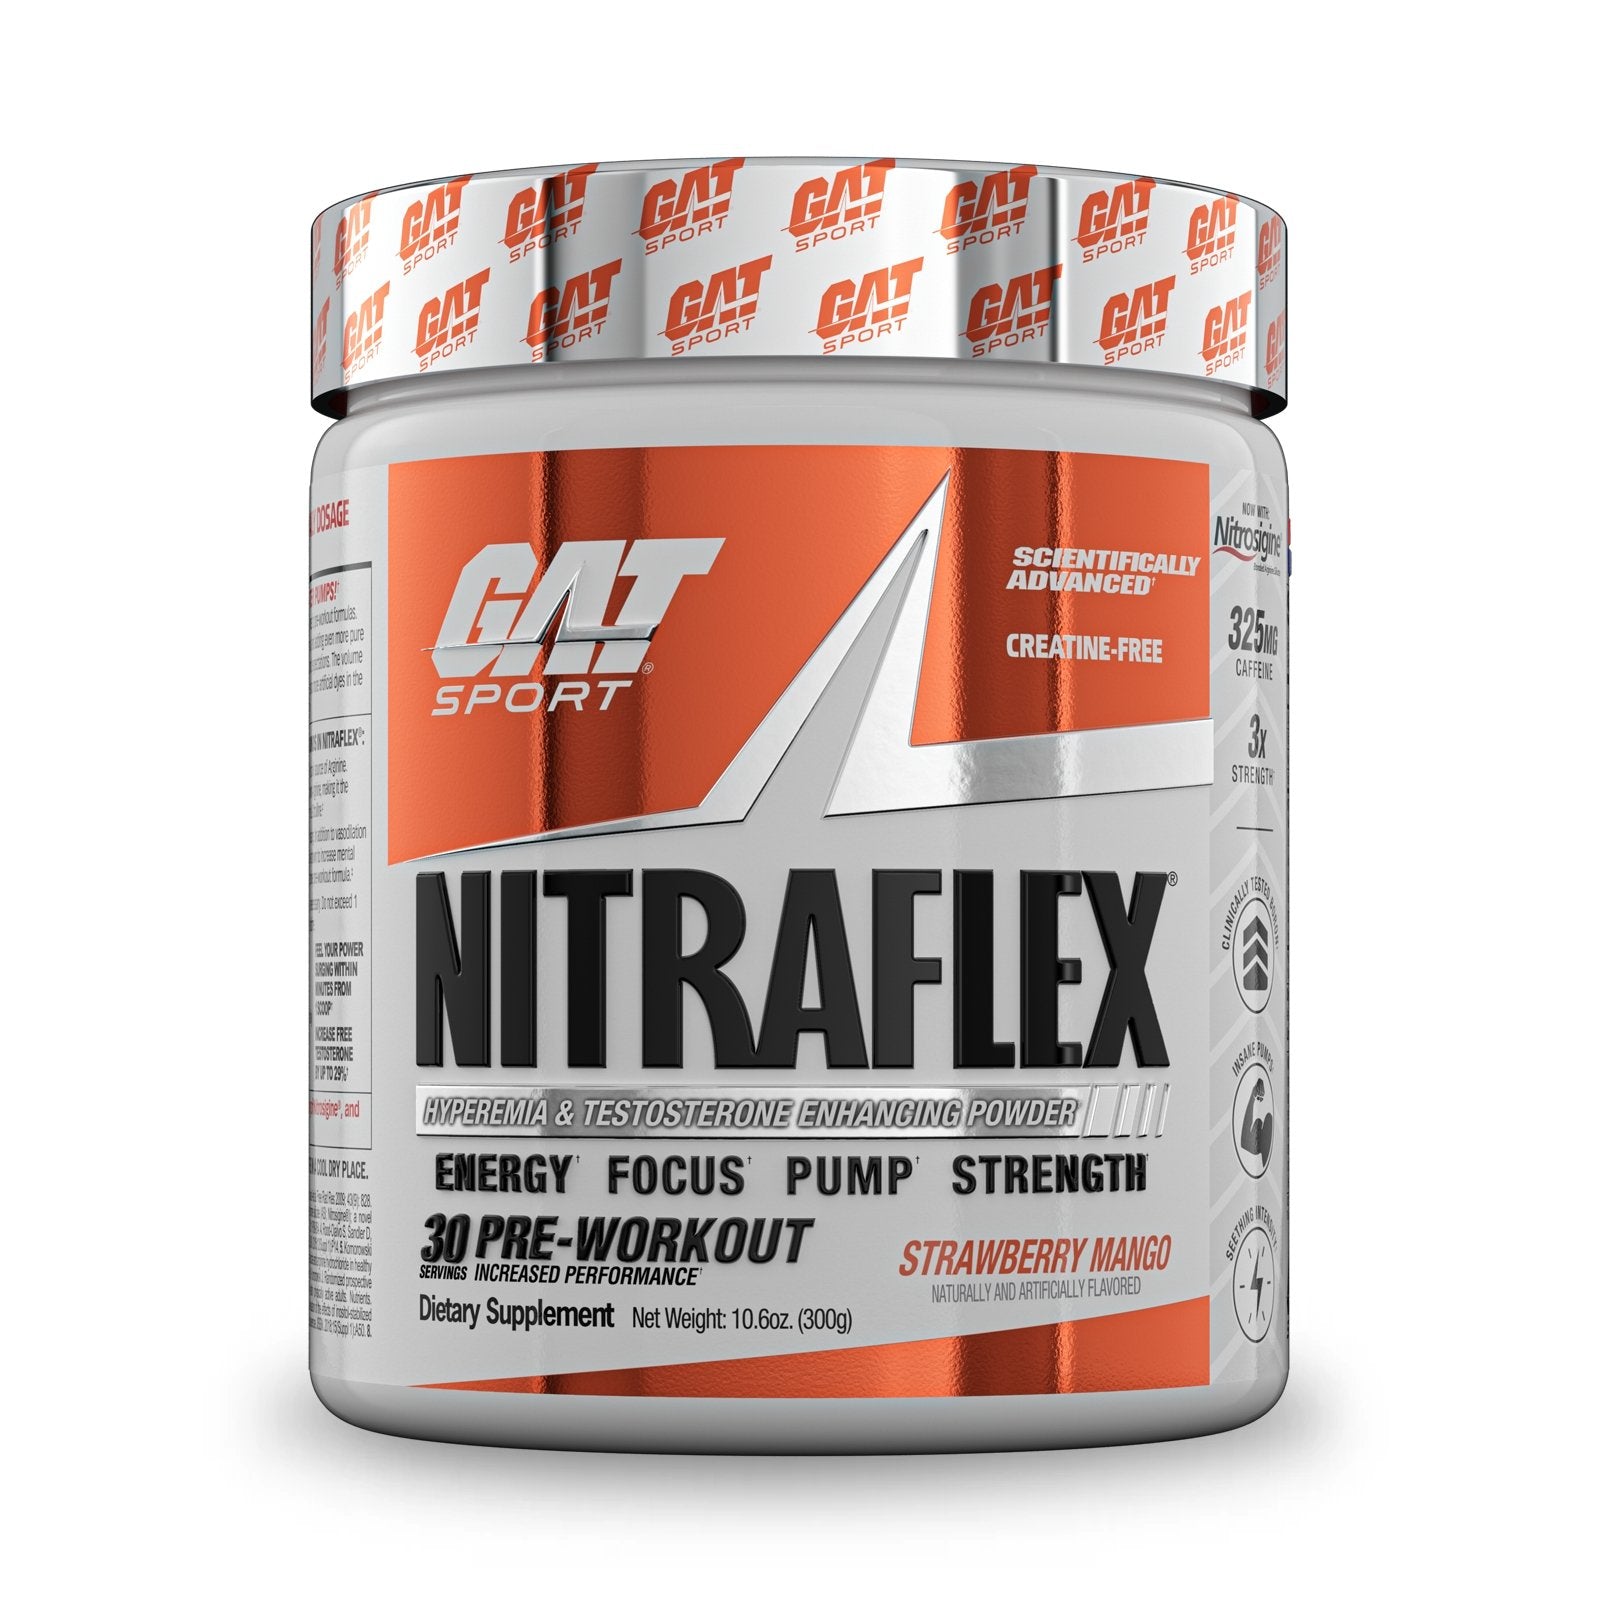 GAT SPORT NITRAFLEX ADVANCED Pre-Workout